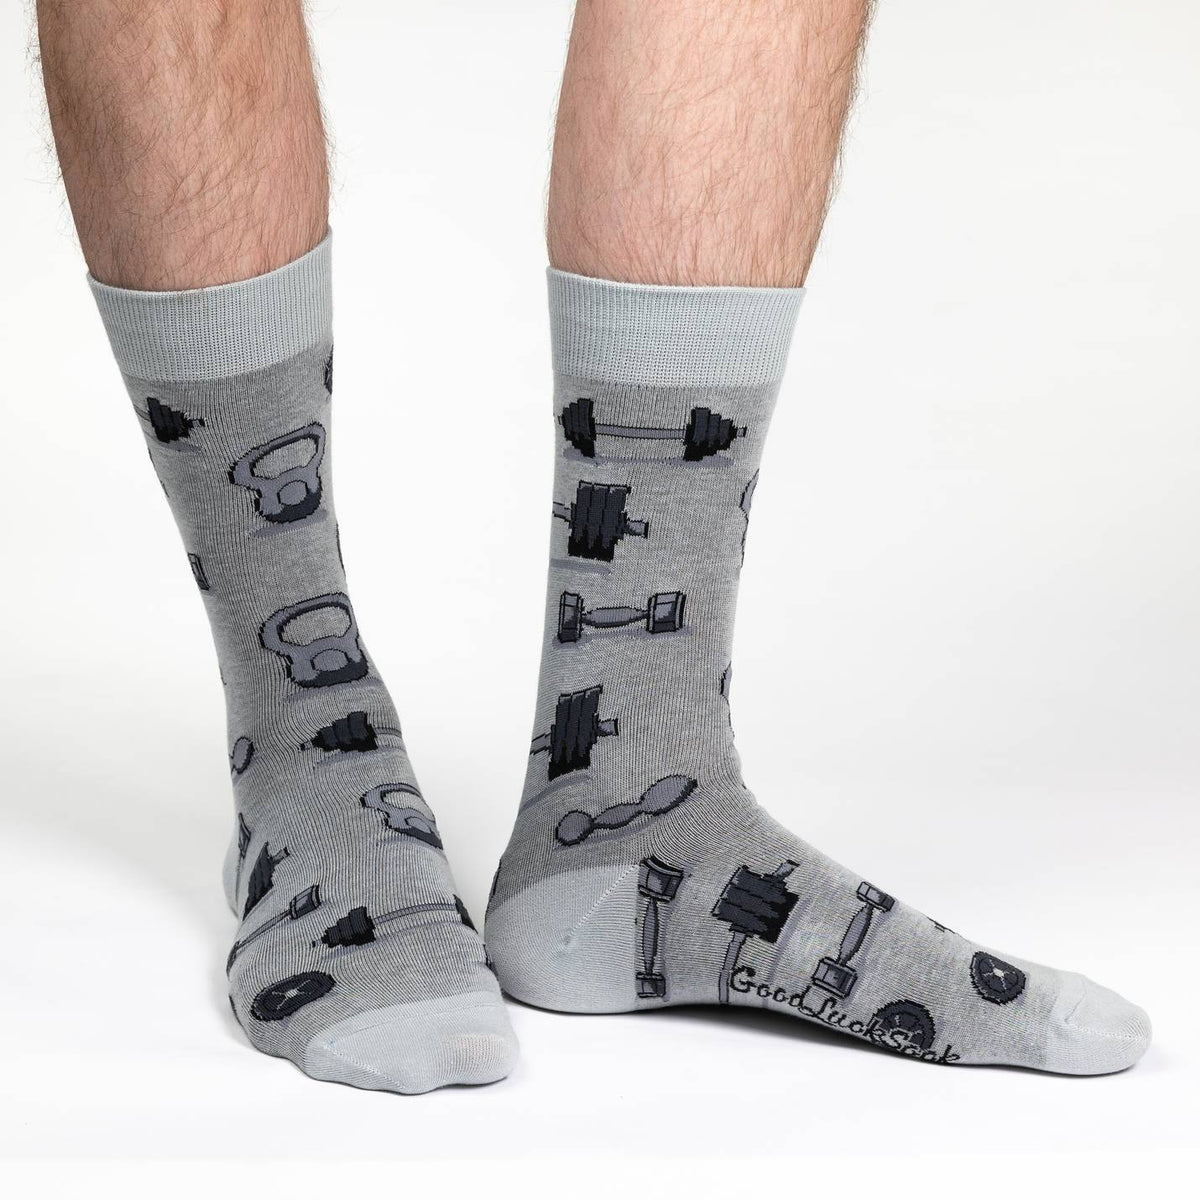 Men's Weights & Dumbbells Socks